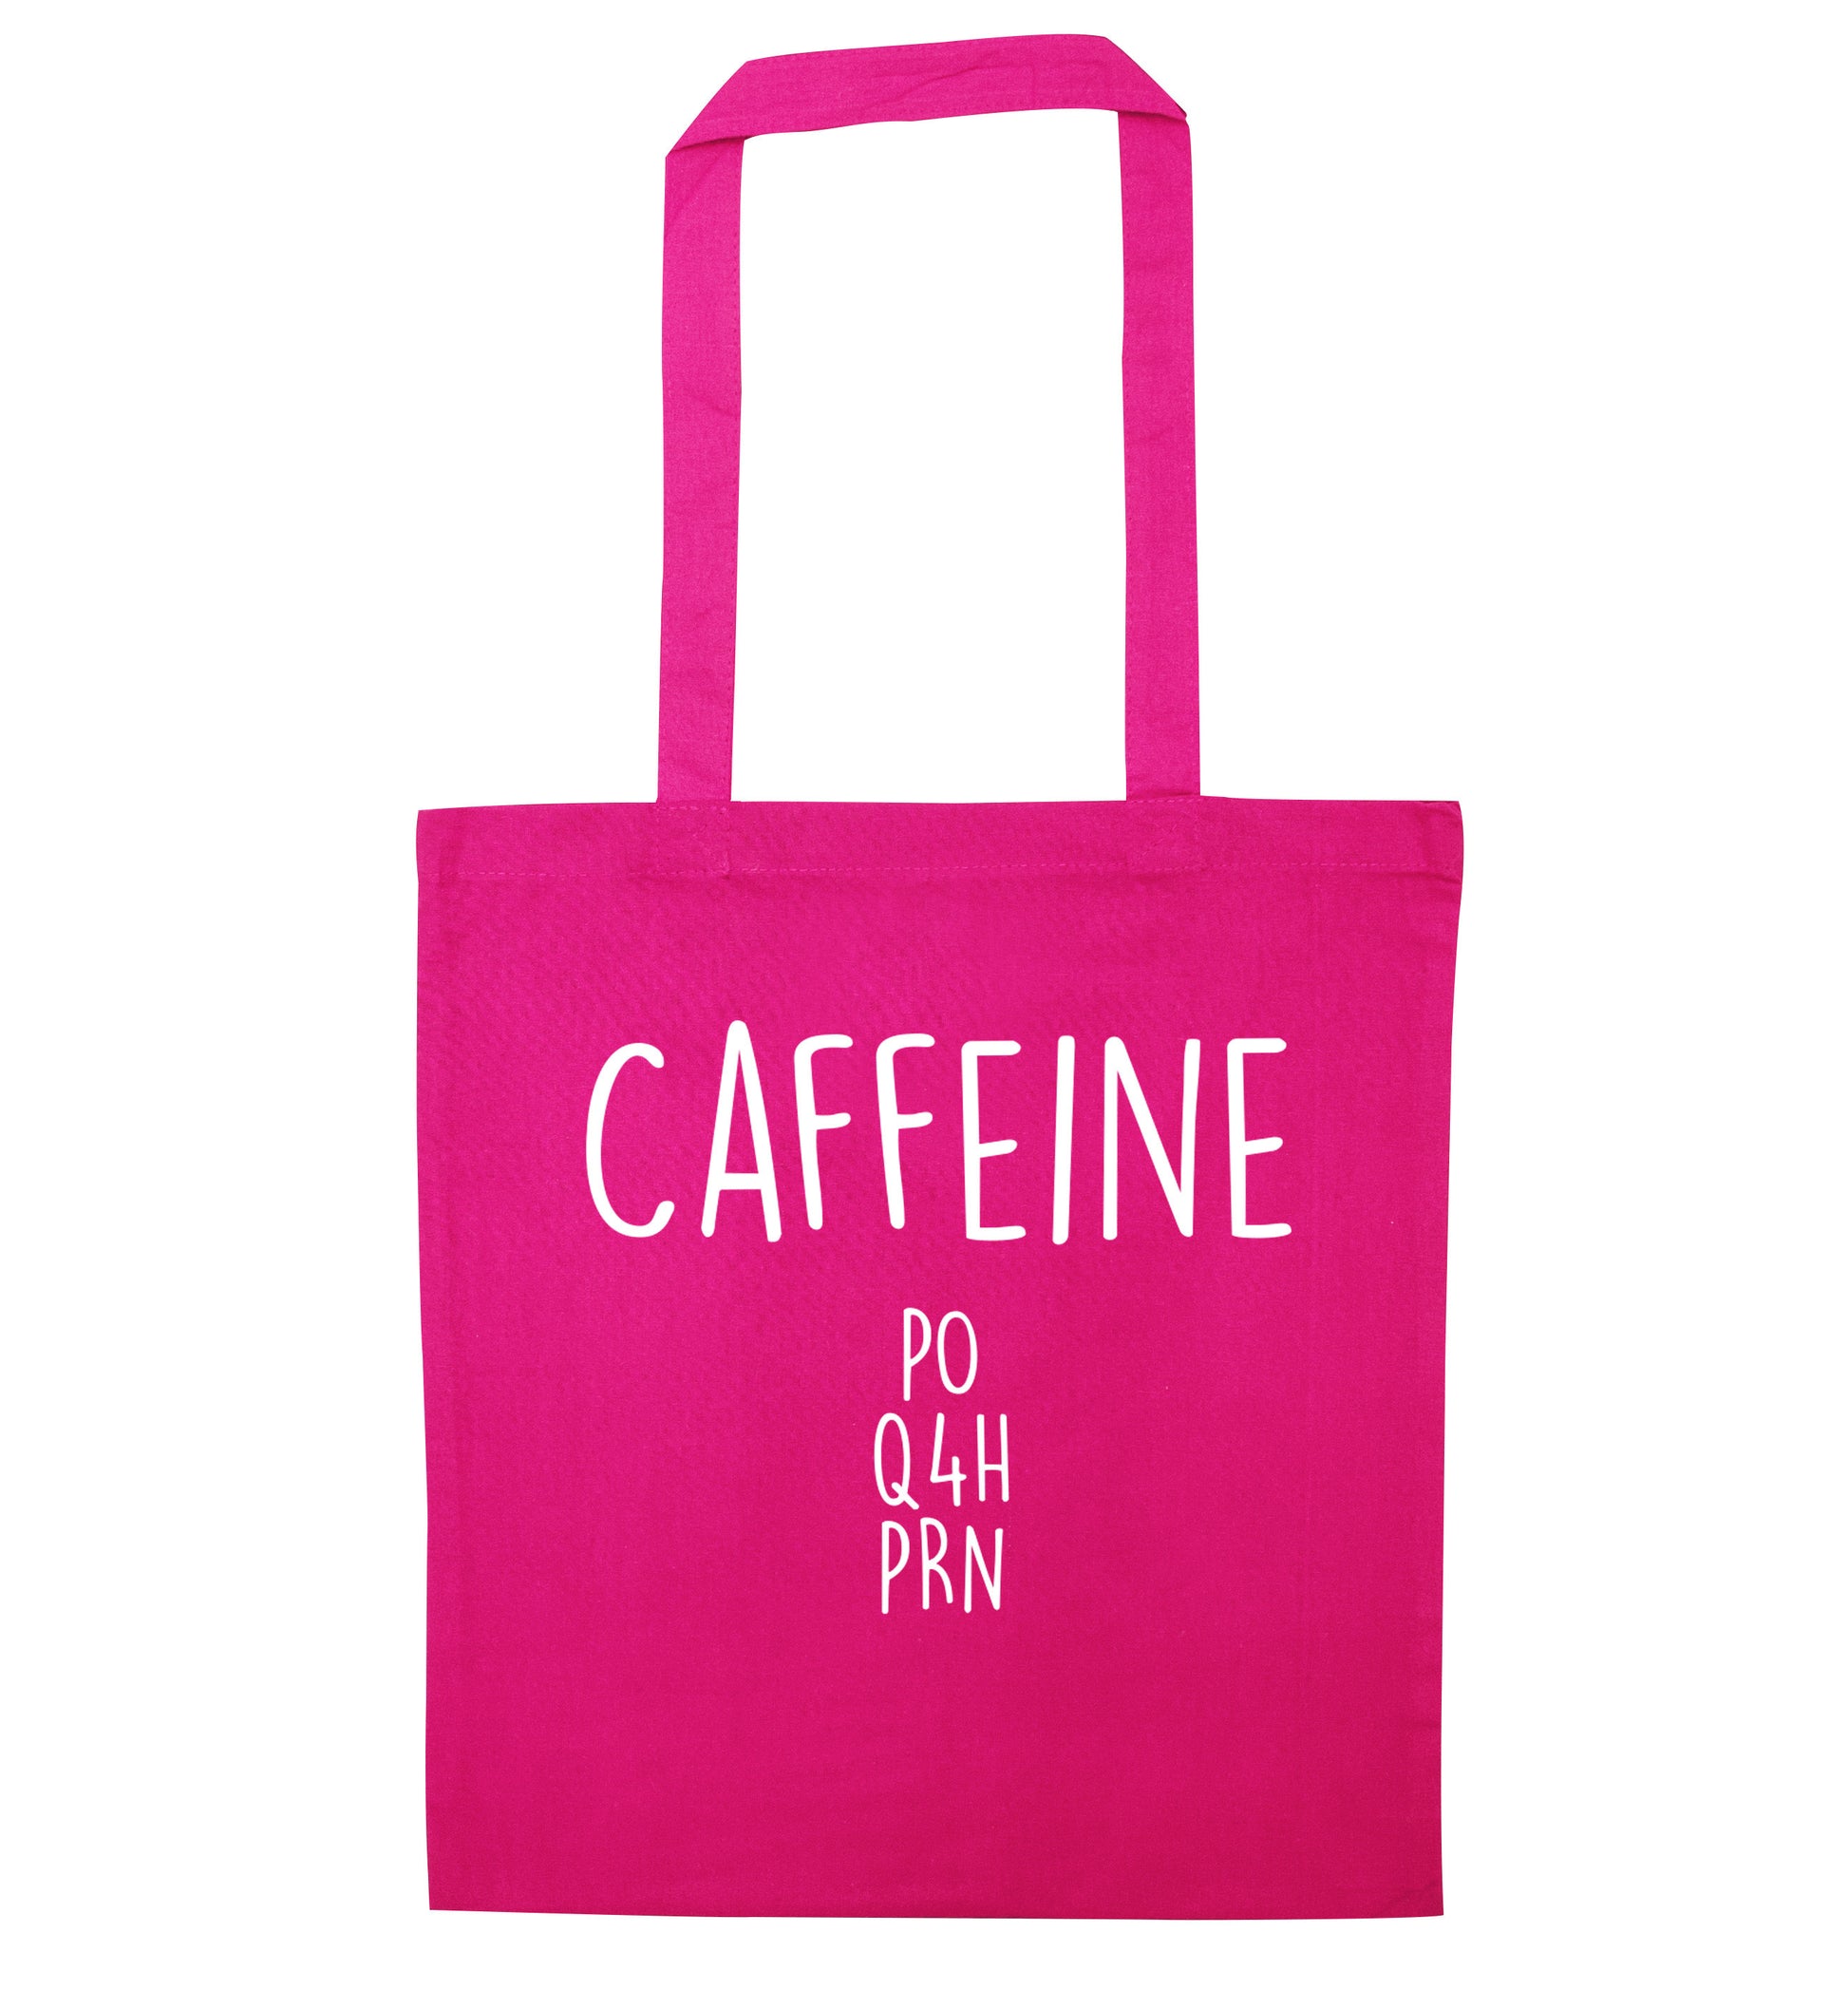 Caffeine PO Q4H PRN pink tote bag